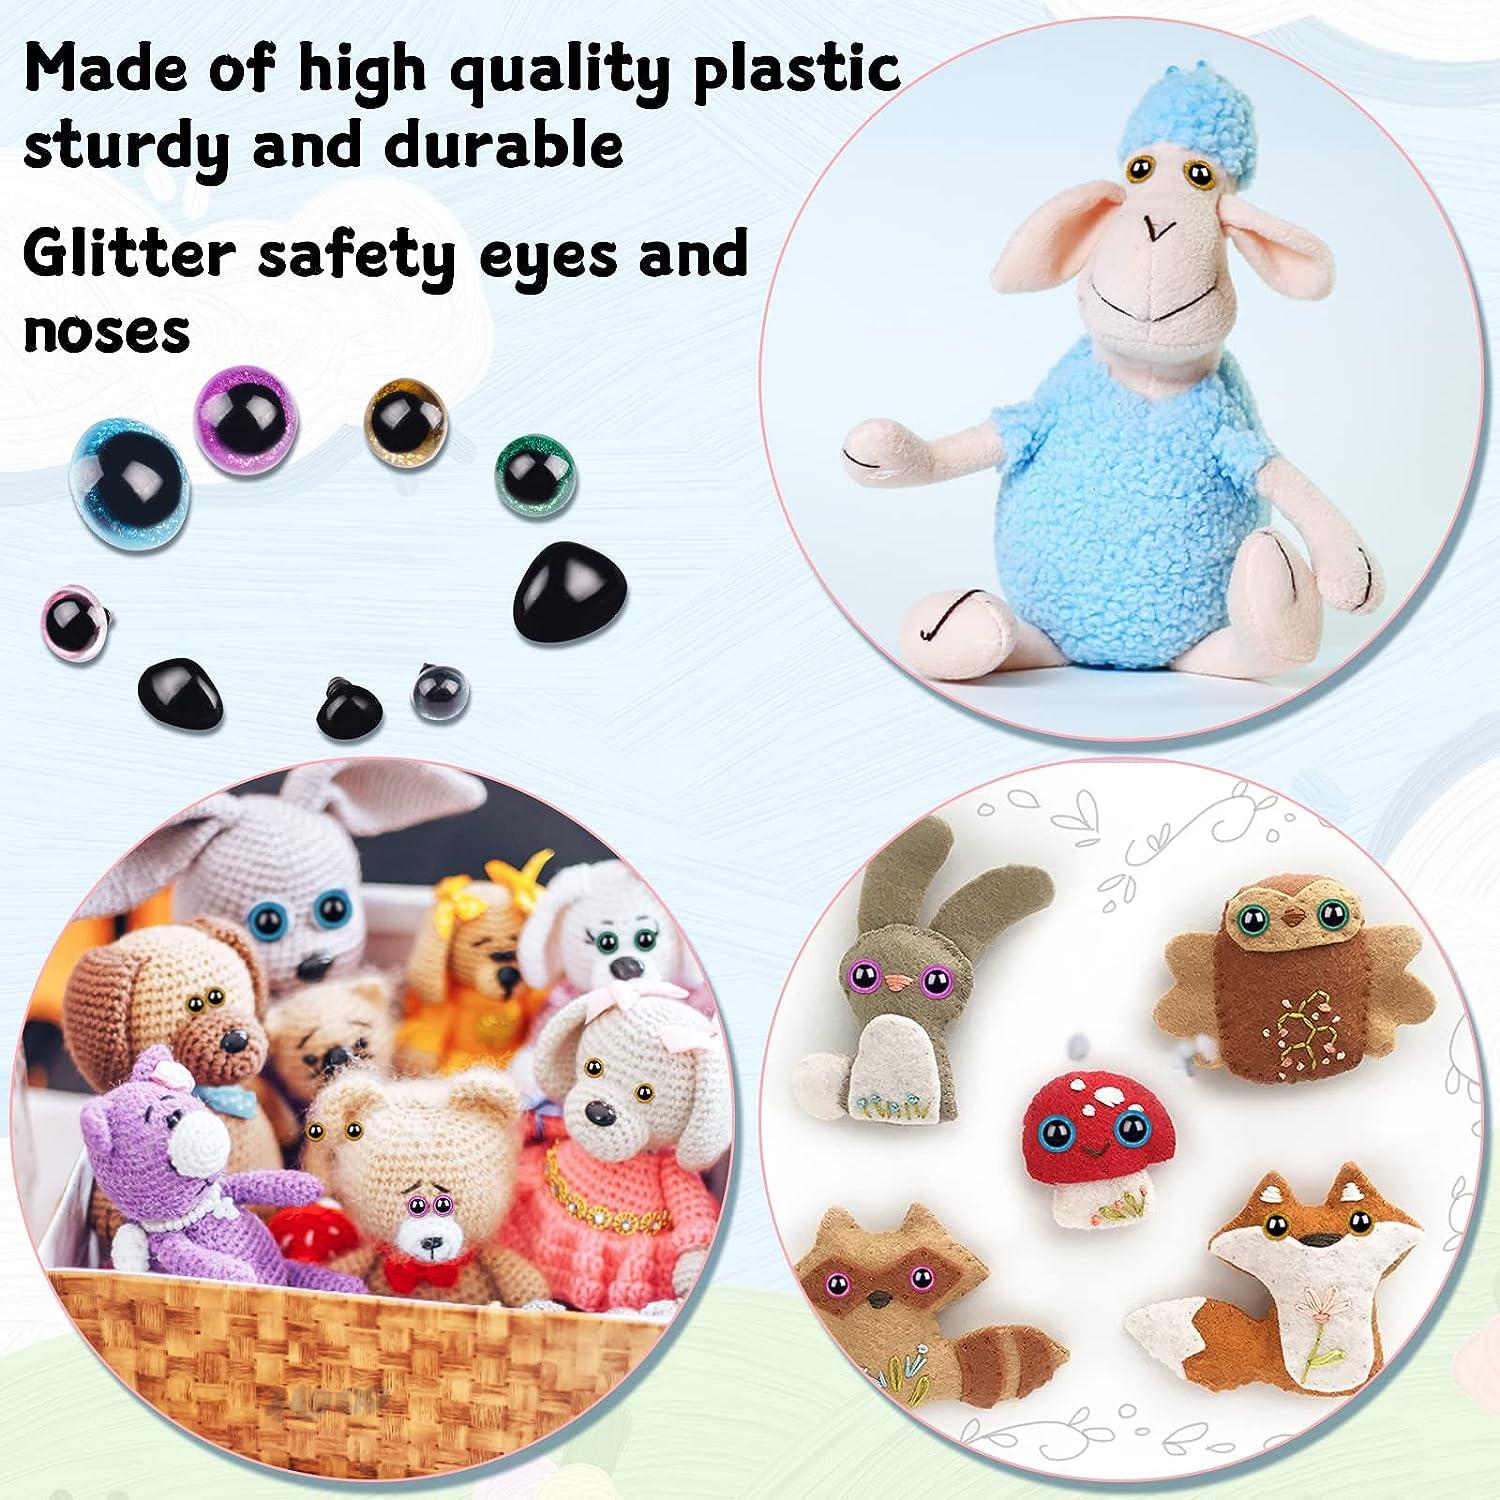 WILLBOND 56 Pcs 16-30 mm Large Safety Eyes Stuffed Animal Eyes Plastic  Craft Crochet Eyes for DIY of Puppet Bear Toy Doll Making, 6 Sizes (Red,  Blue